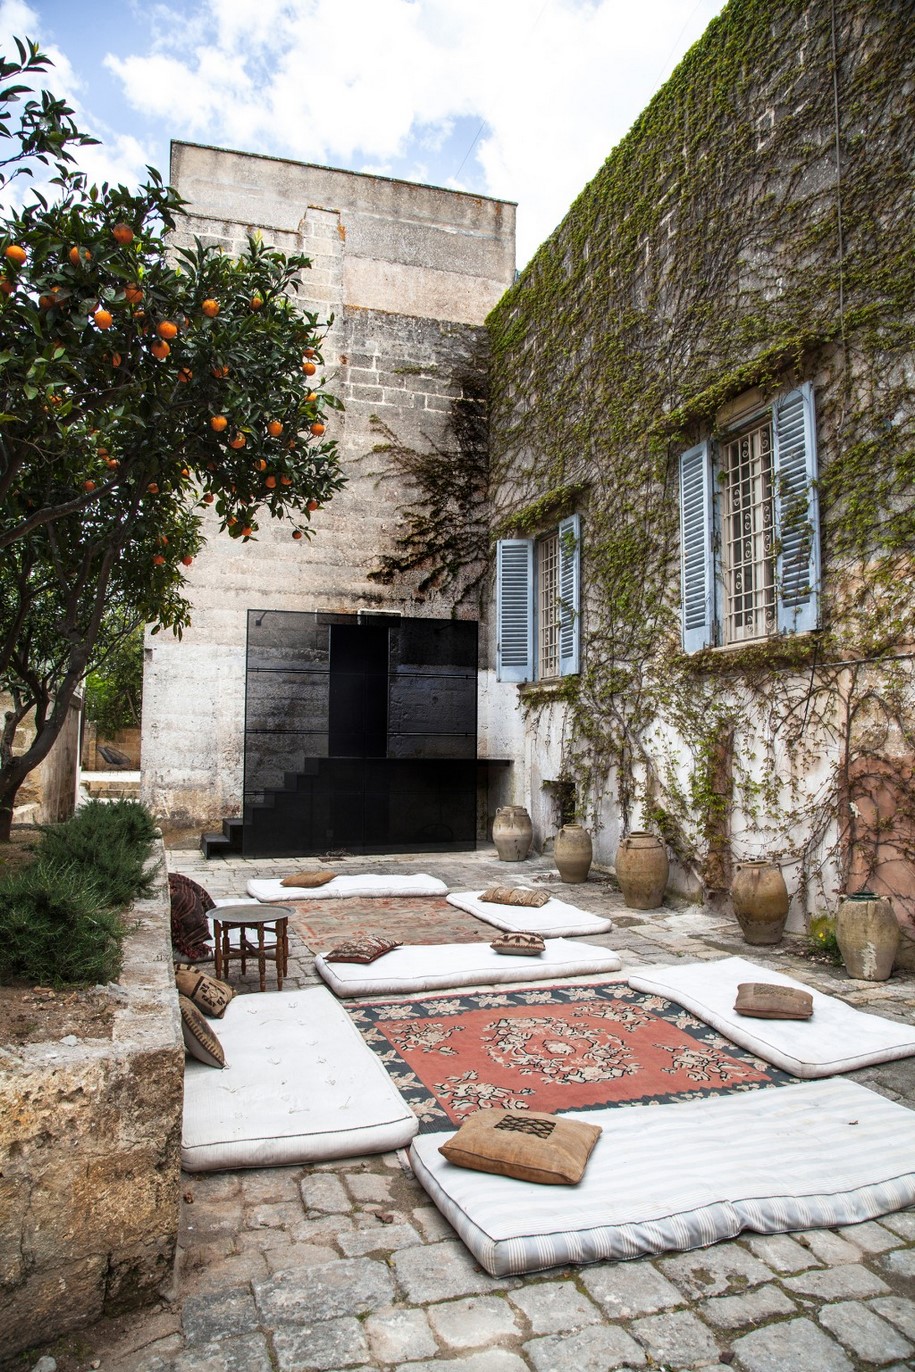 Archisearch Palomba Serafini Associati turned a historical palace into studios for artists